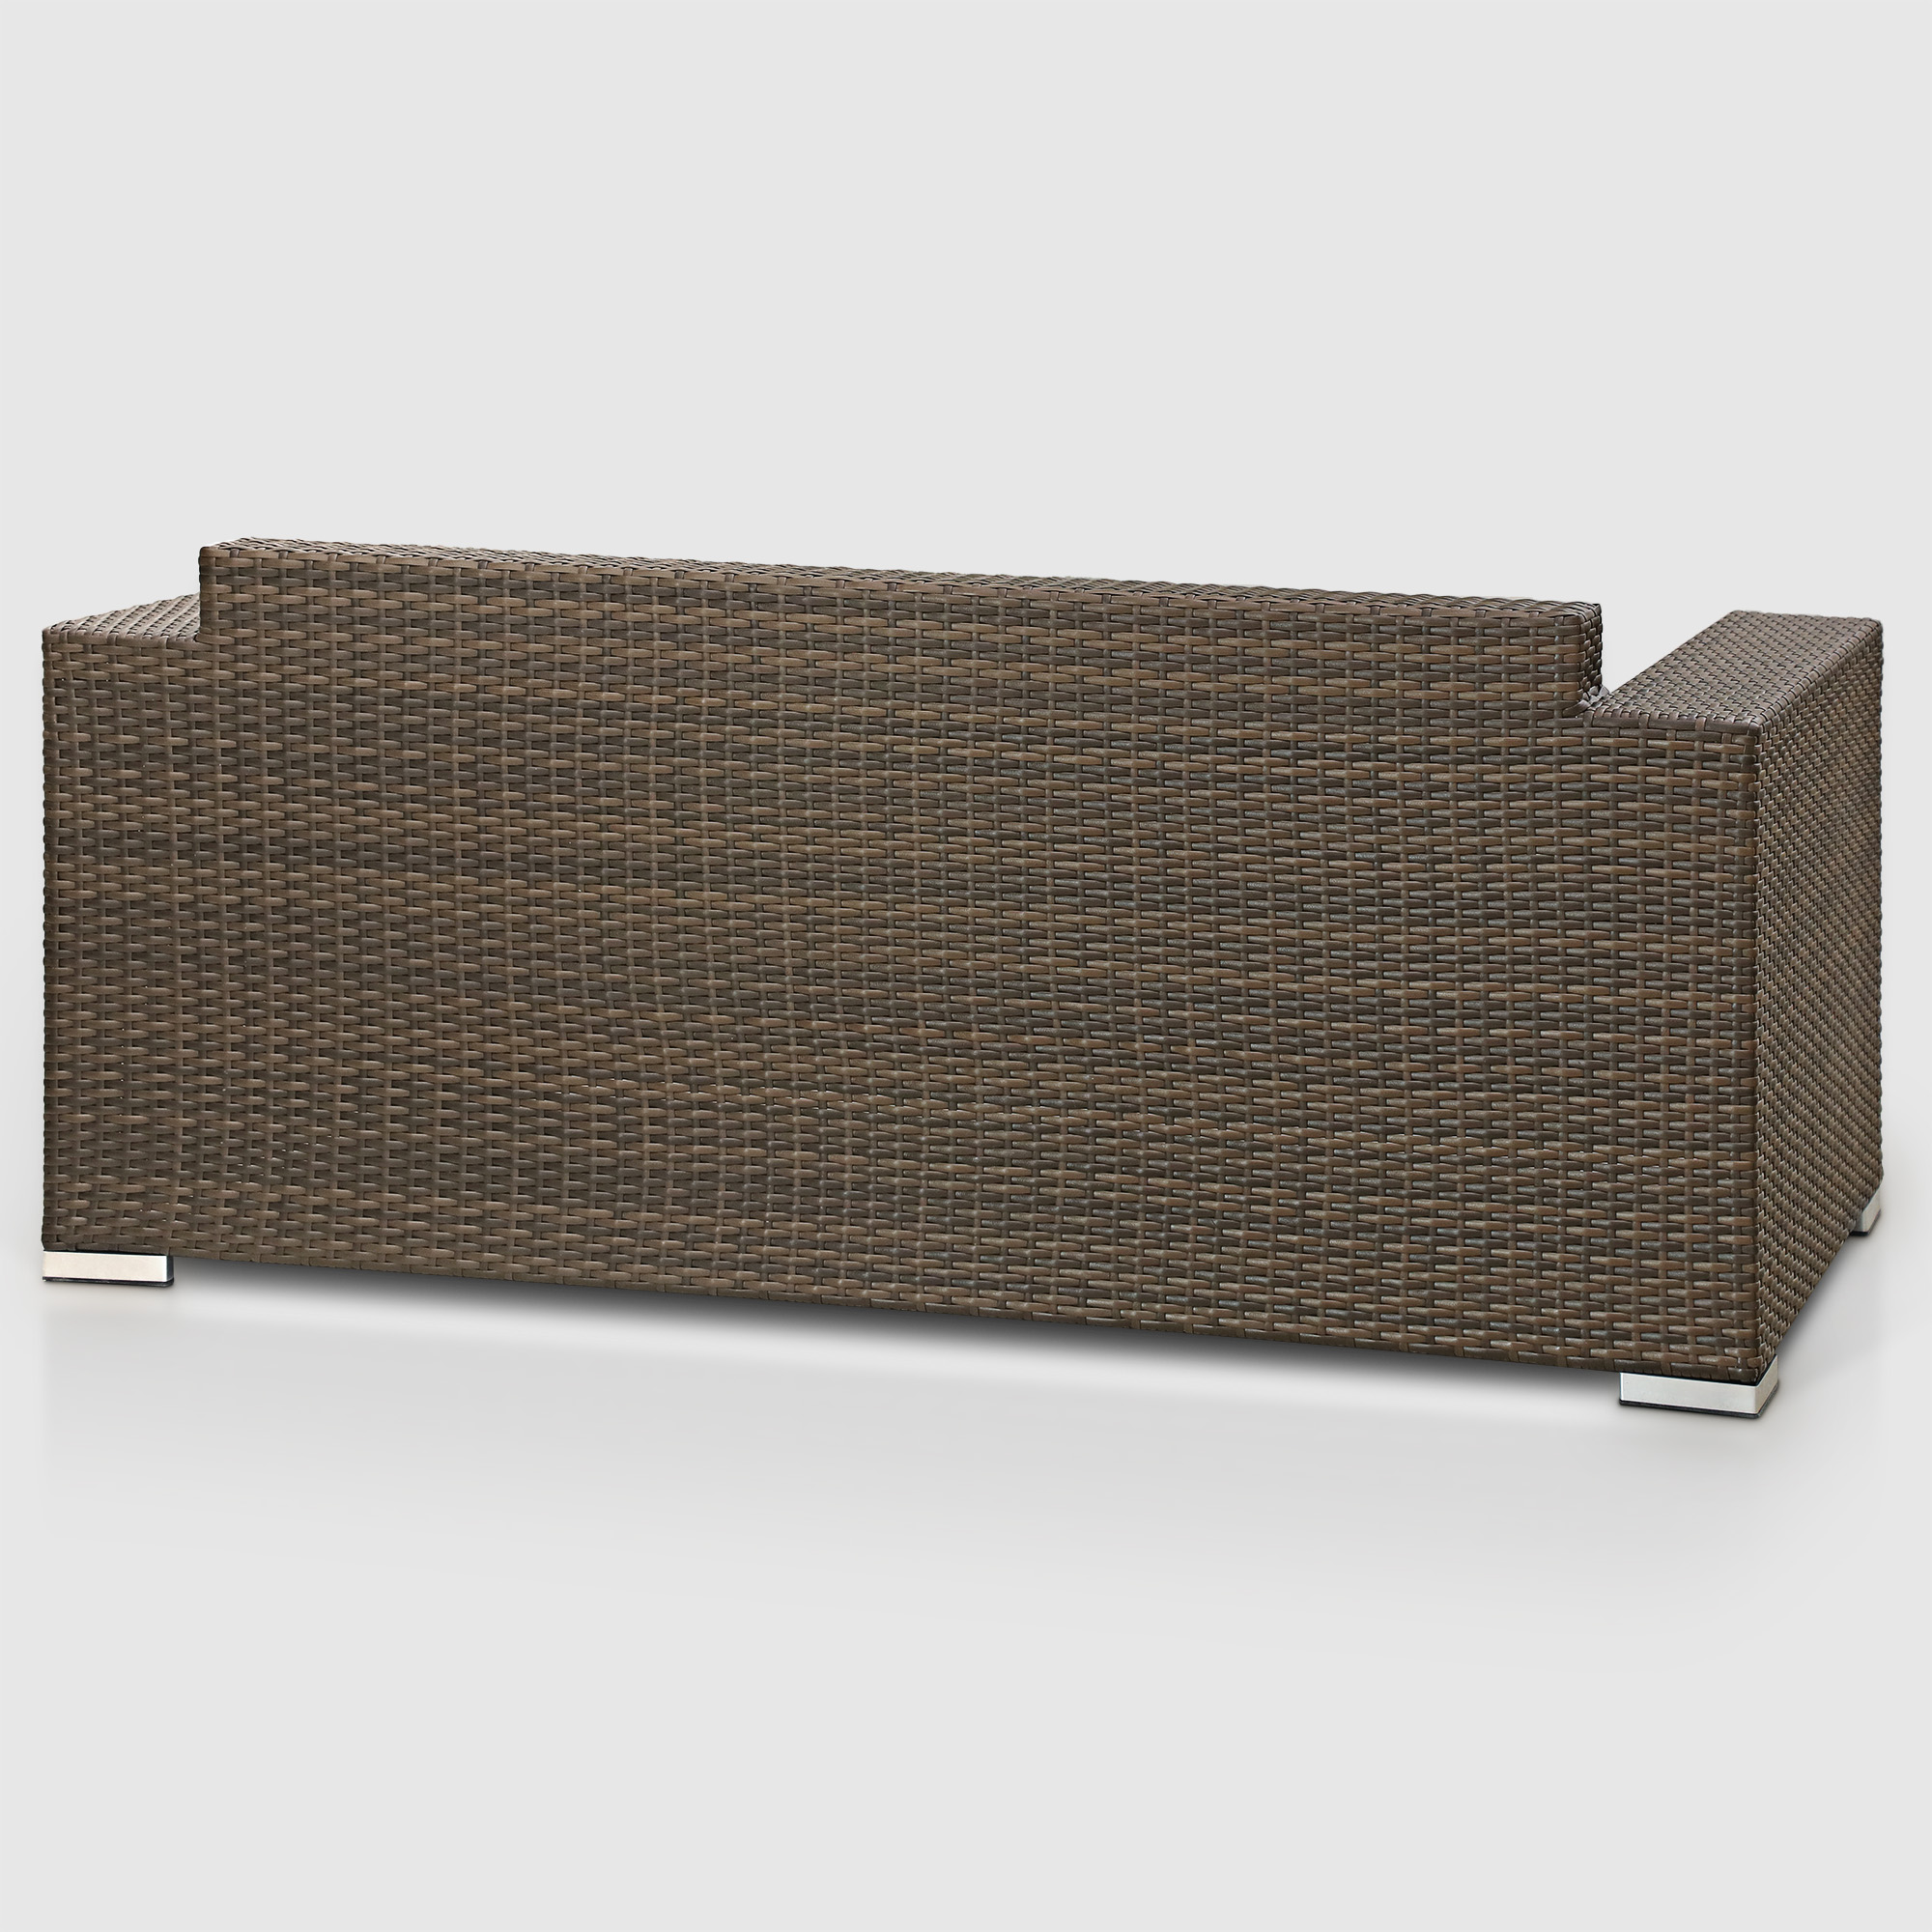 Комплект мебели Ns Rattan Cleo коричневый с бежевым 7 предметов, цвет бежевый, размер 224х88х70 - фото 10